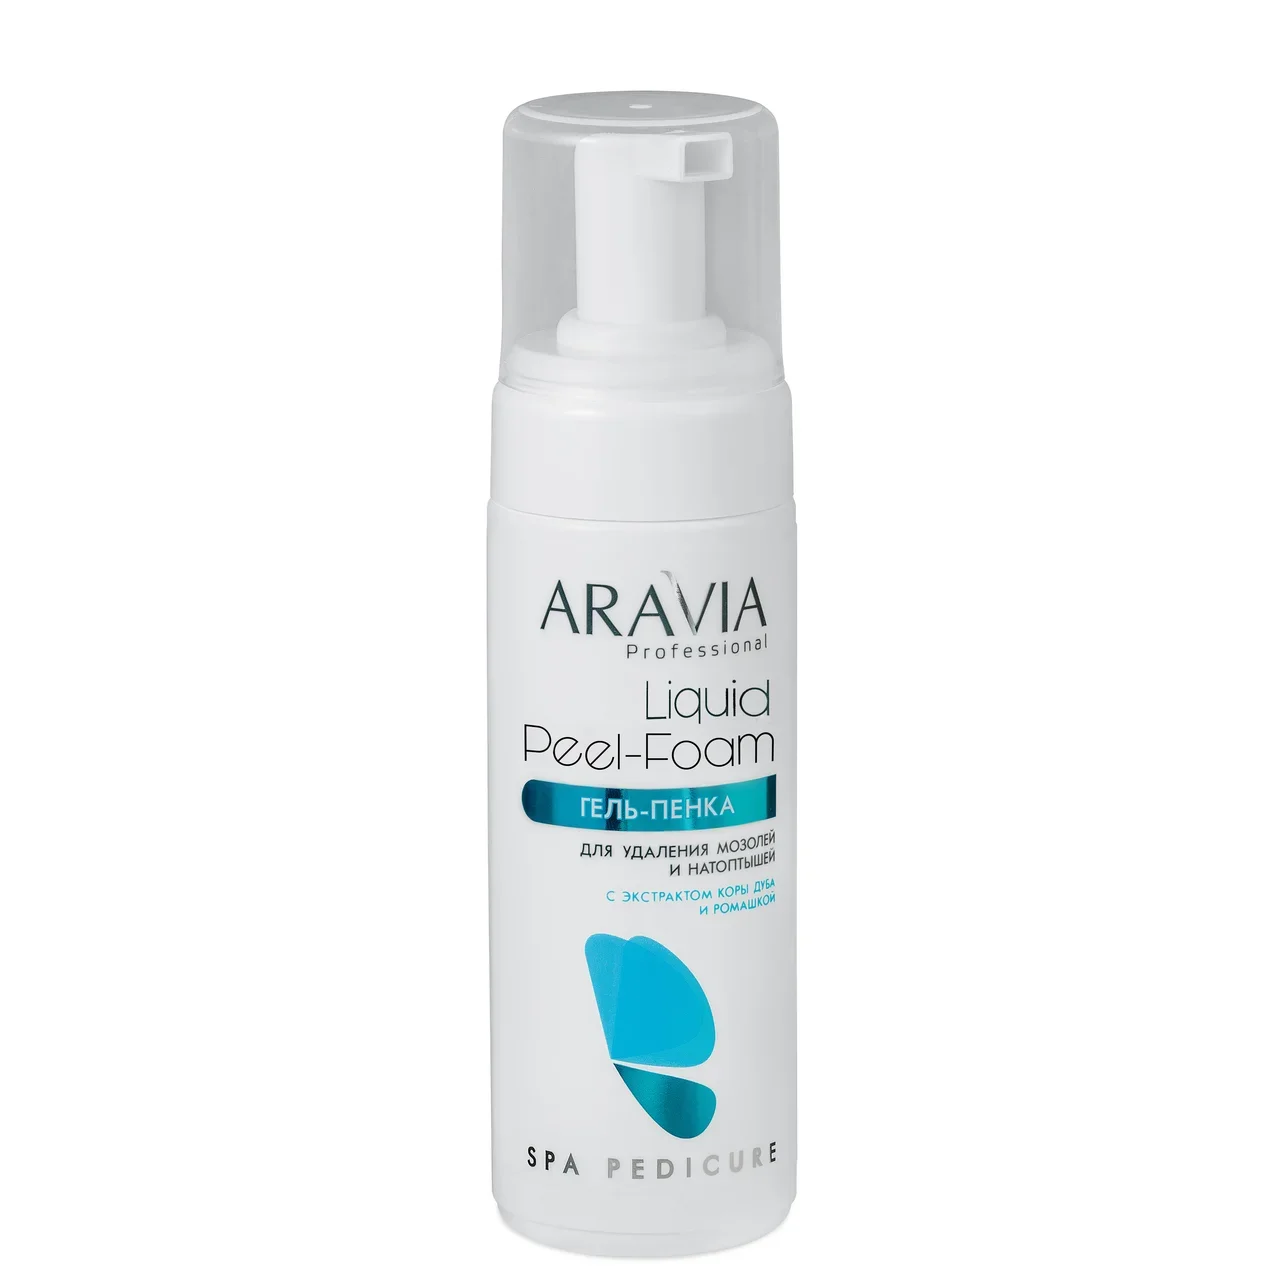 Aravia Professional Гель-пенка для удаления мозолей и натоптышей Liquid Peel-Foam, 160 мл (Aravia Professional)